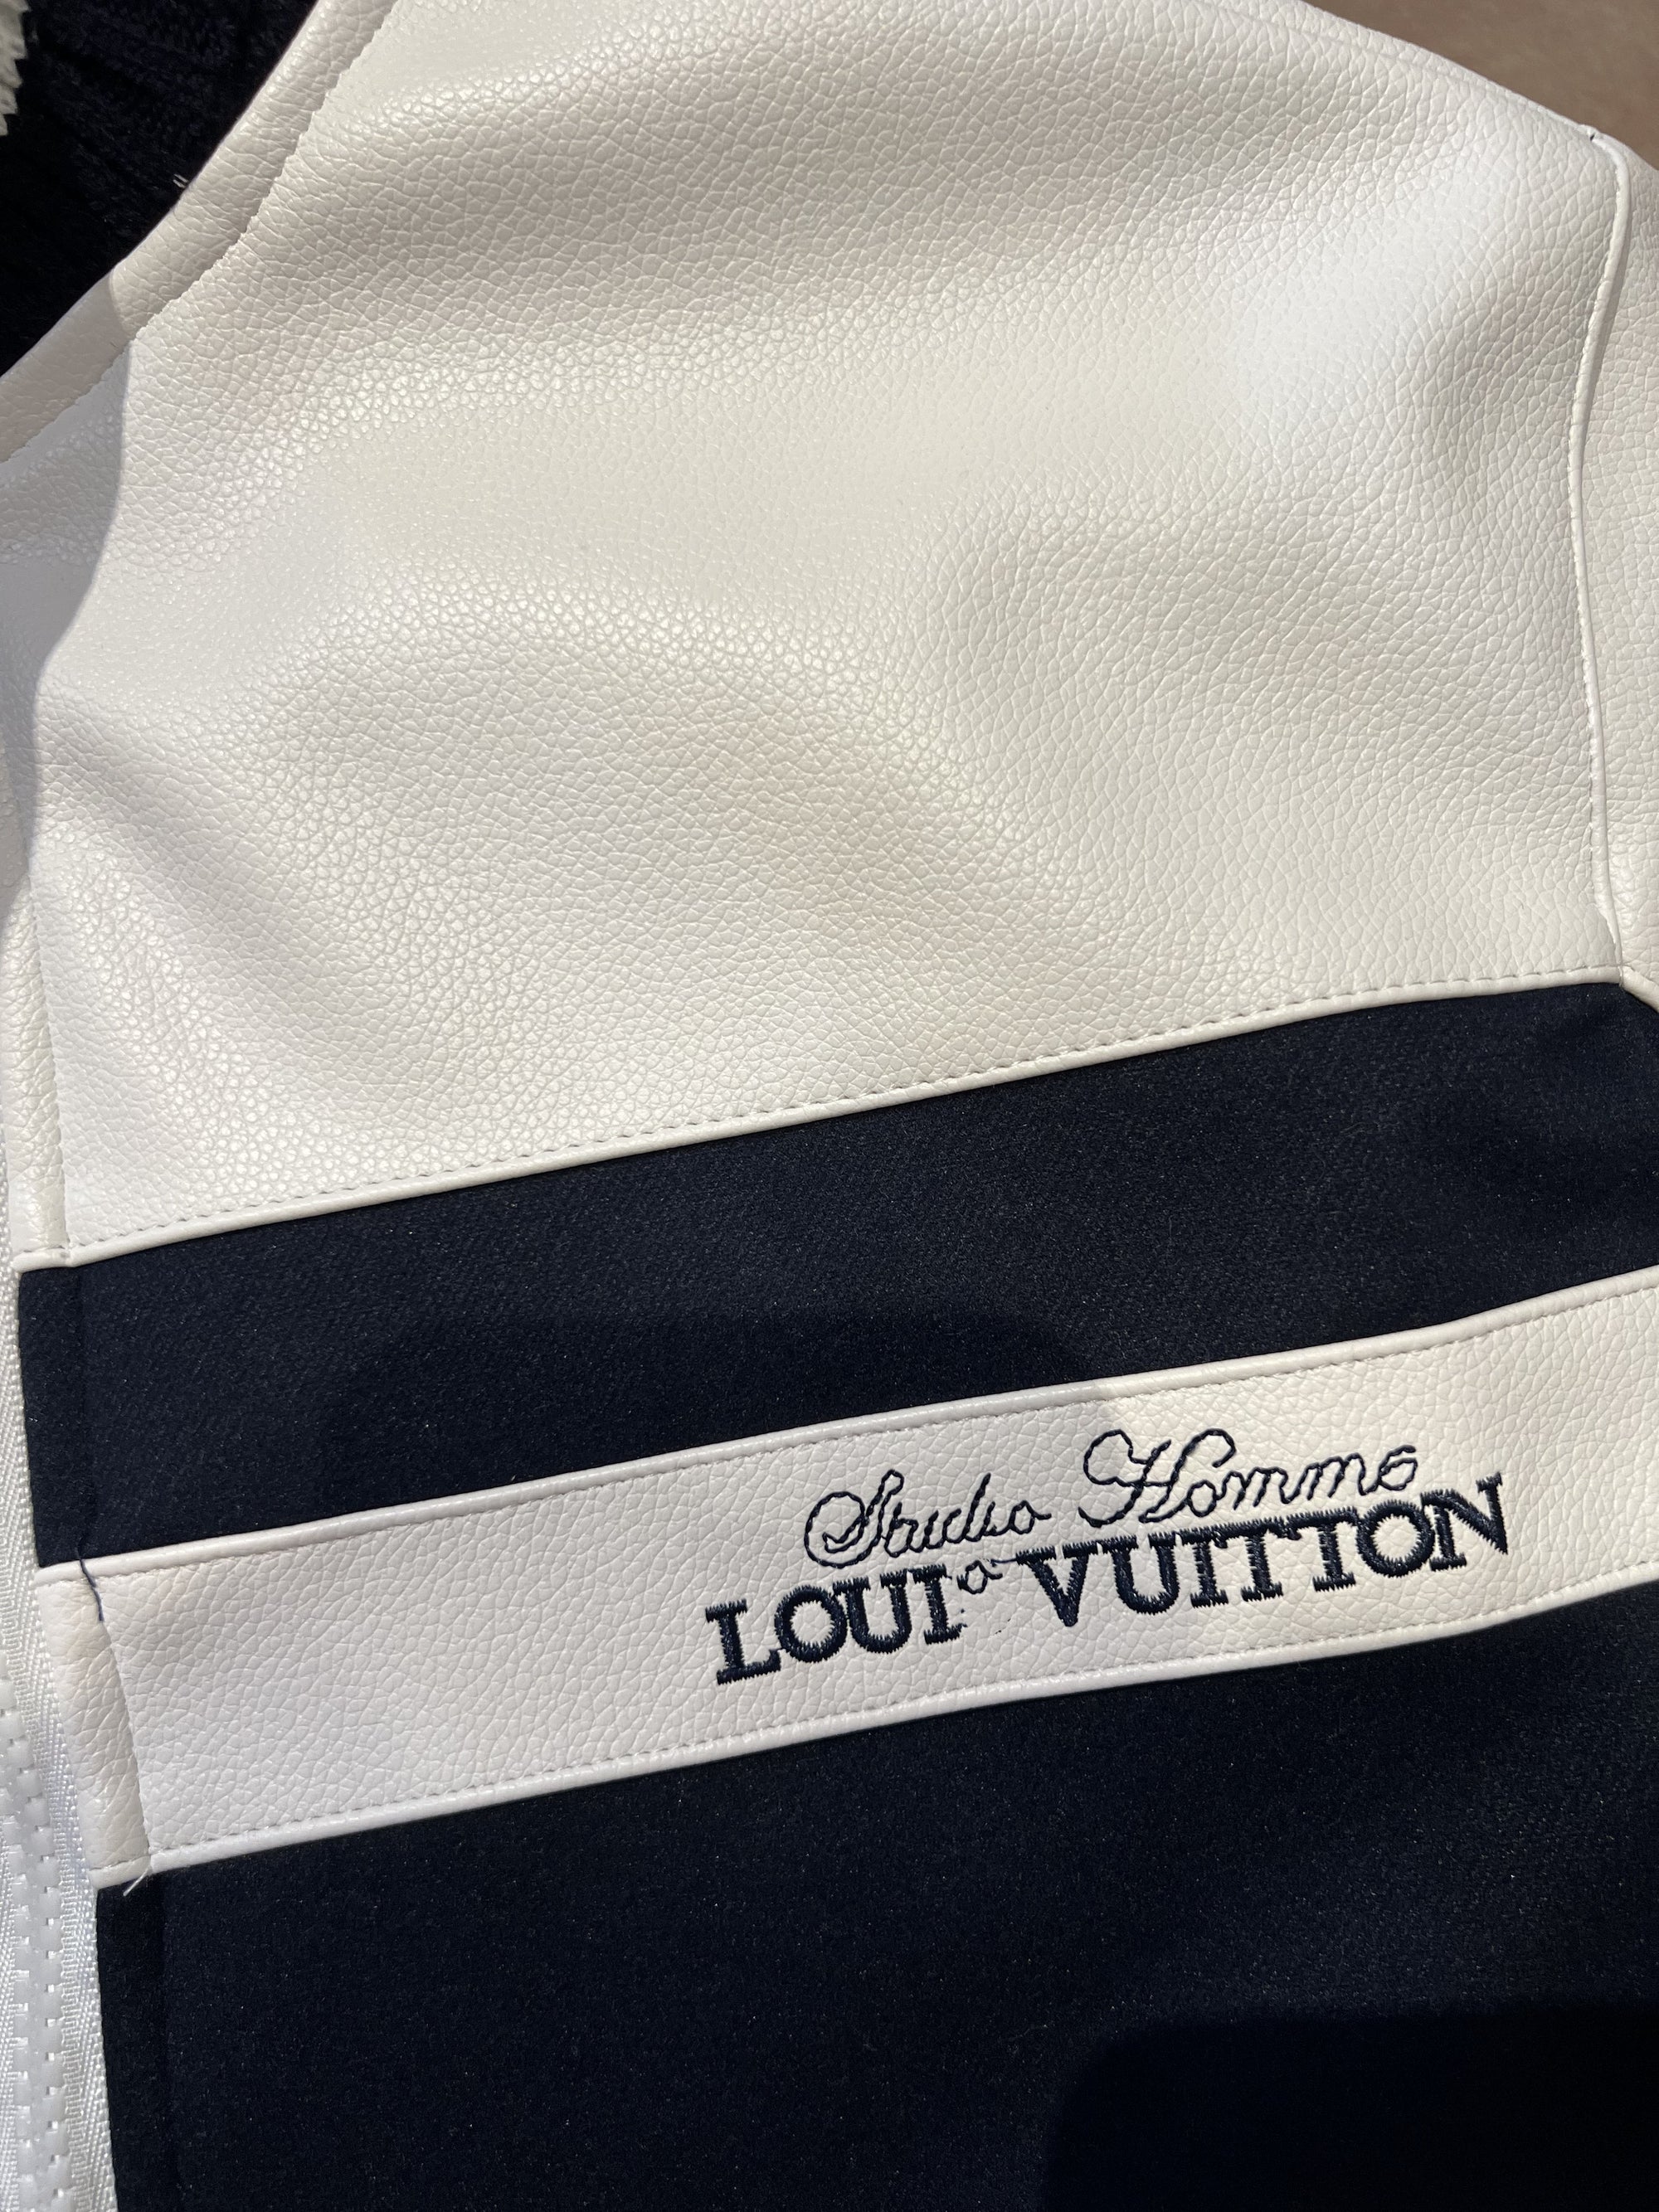 Lucury Embroidered Pu Leather Coat